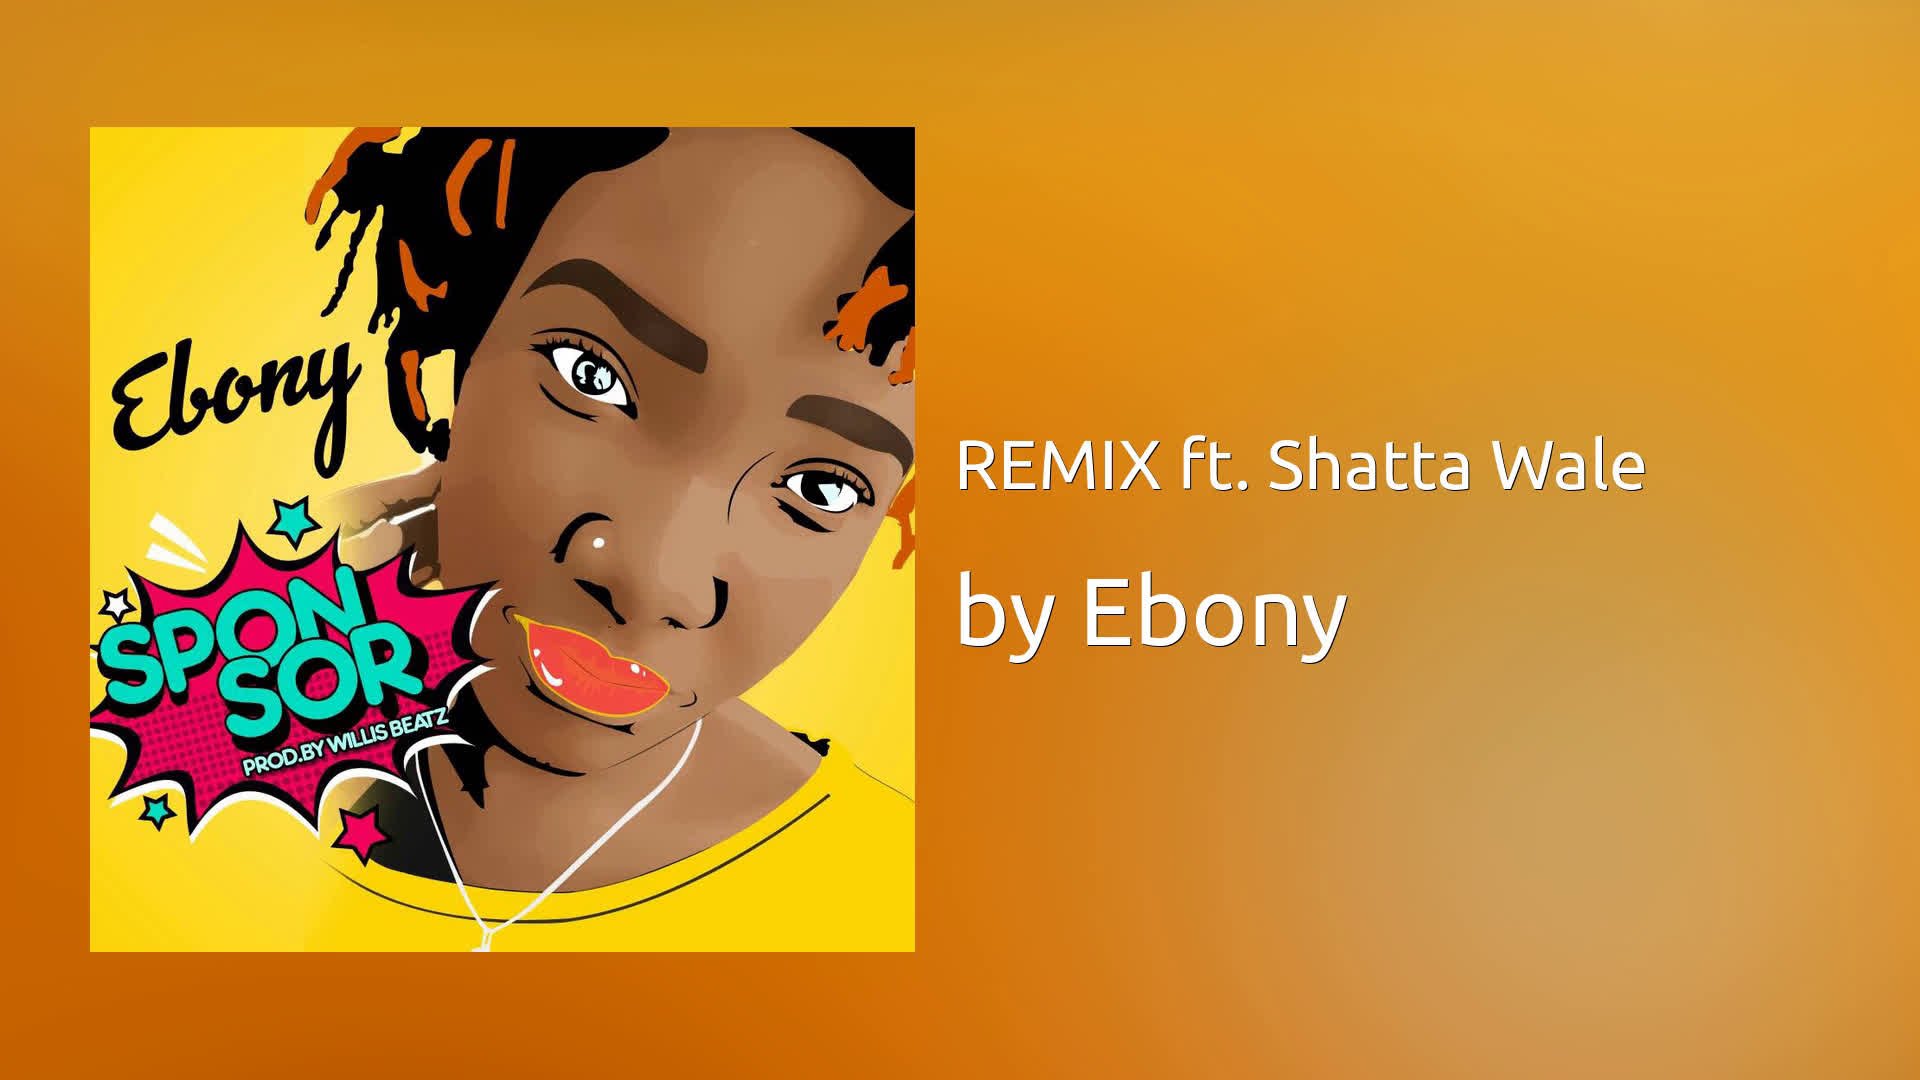 Download ebony song sponsor